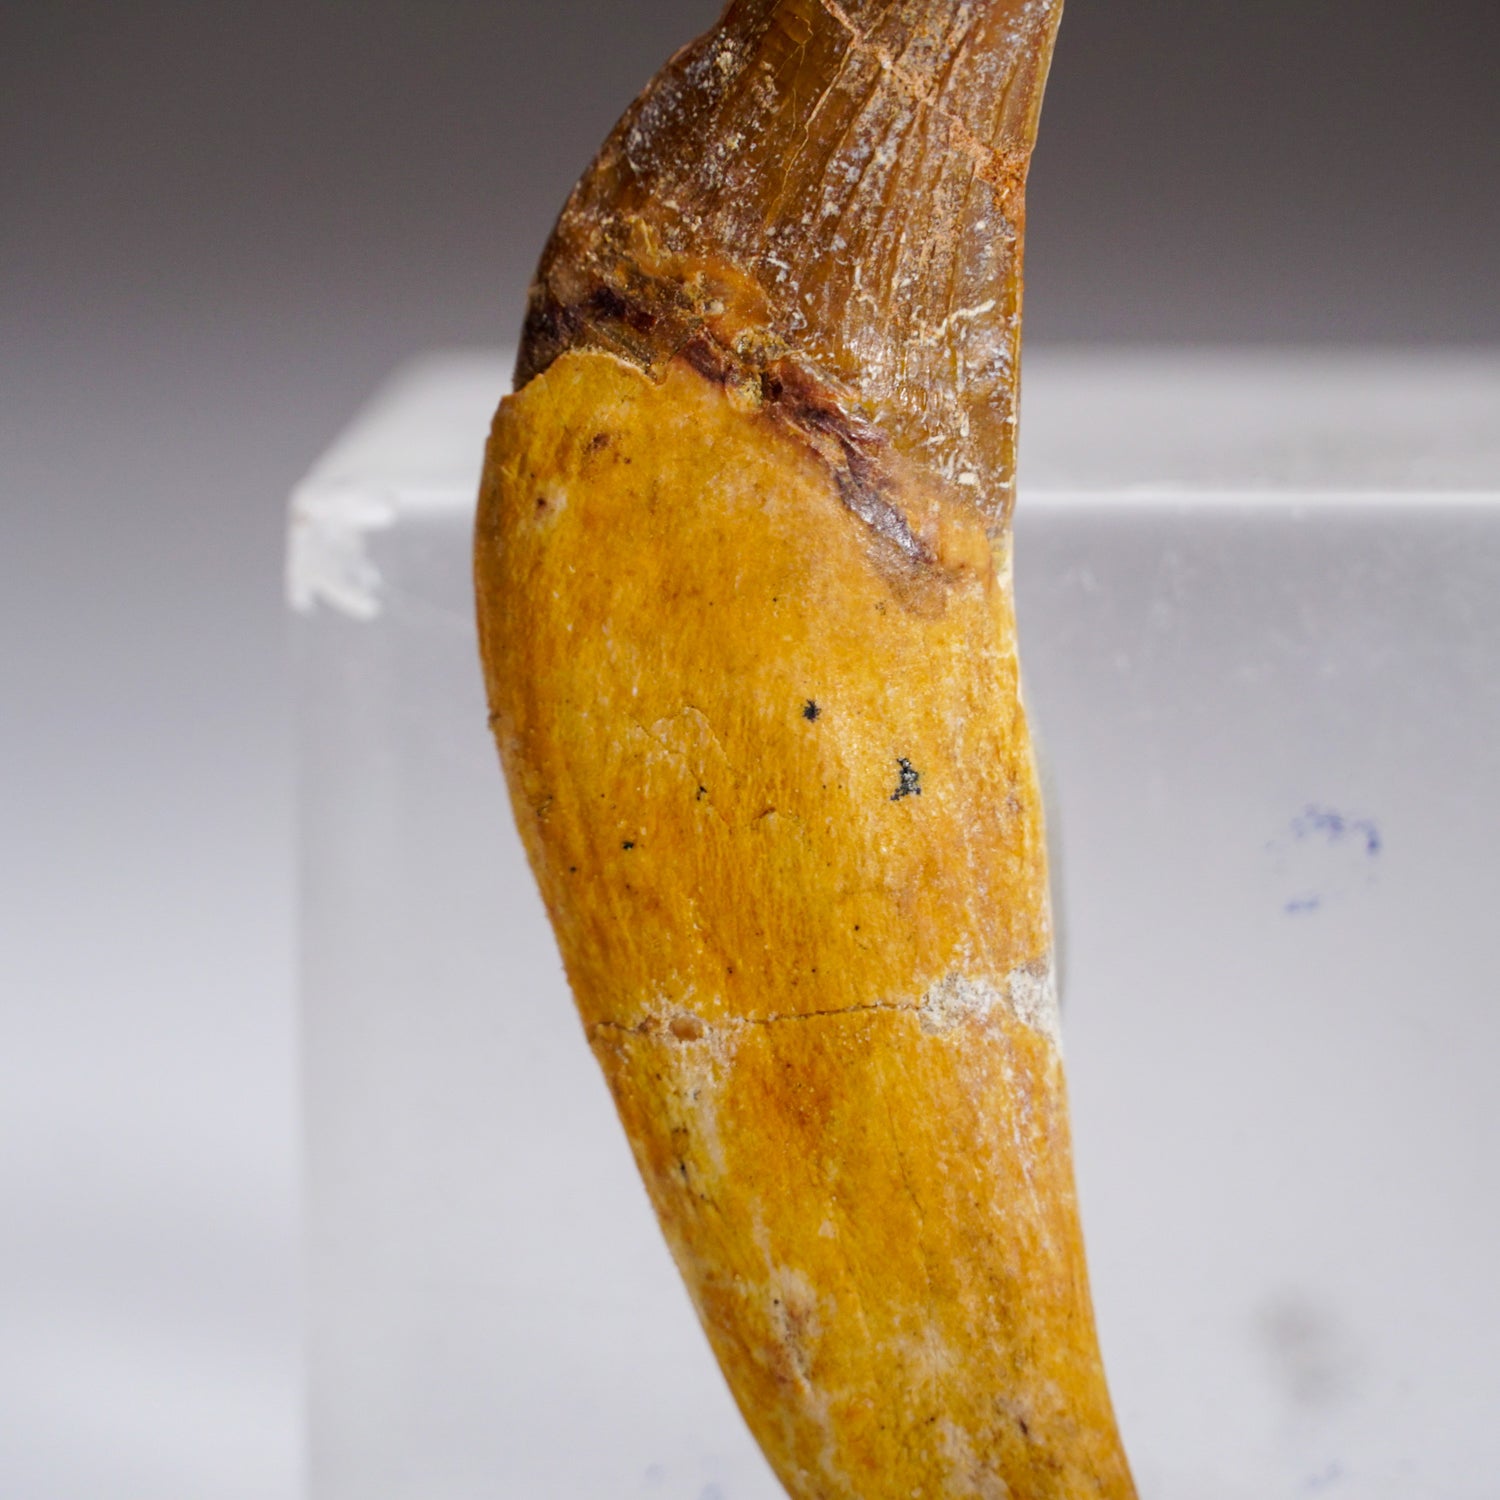 Genuine Carcharodontosaurus Tooth in Display Box (24 grams)